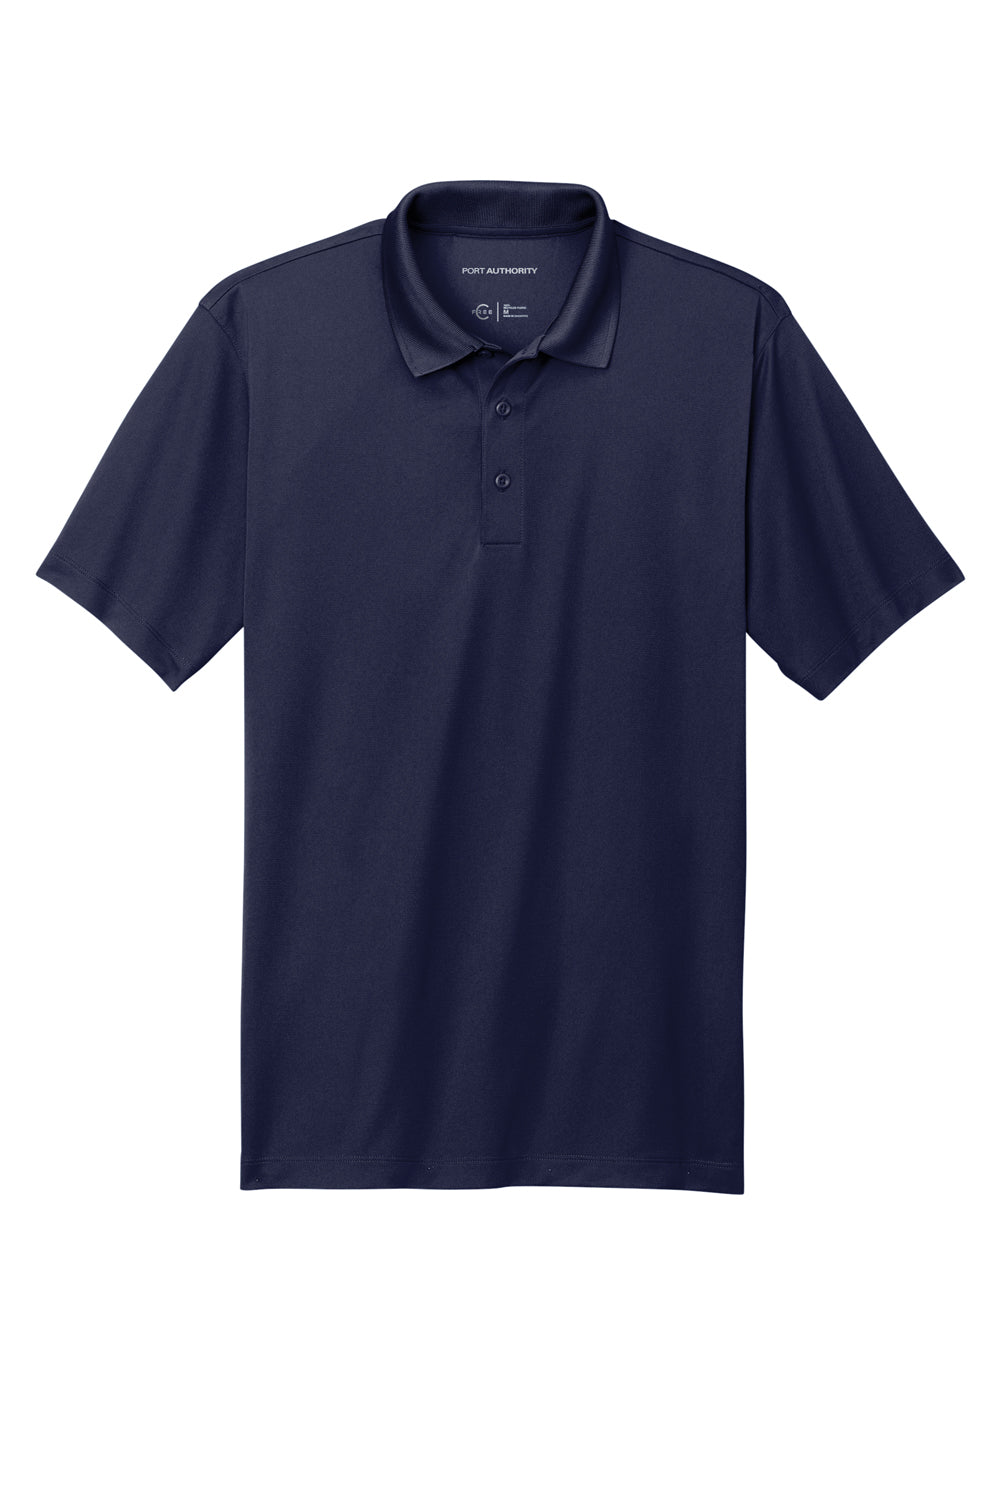 Port Authority K863 C-Free Performance Short Sleeve Polo Shirt True Navy Blue Flat Front